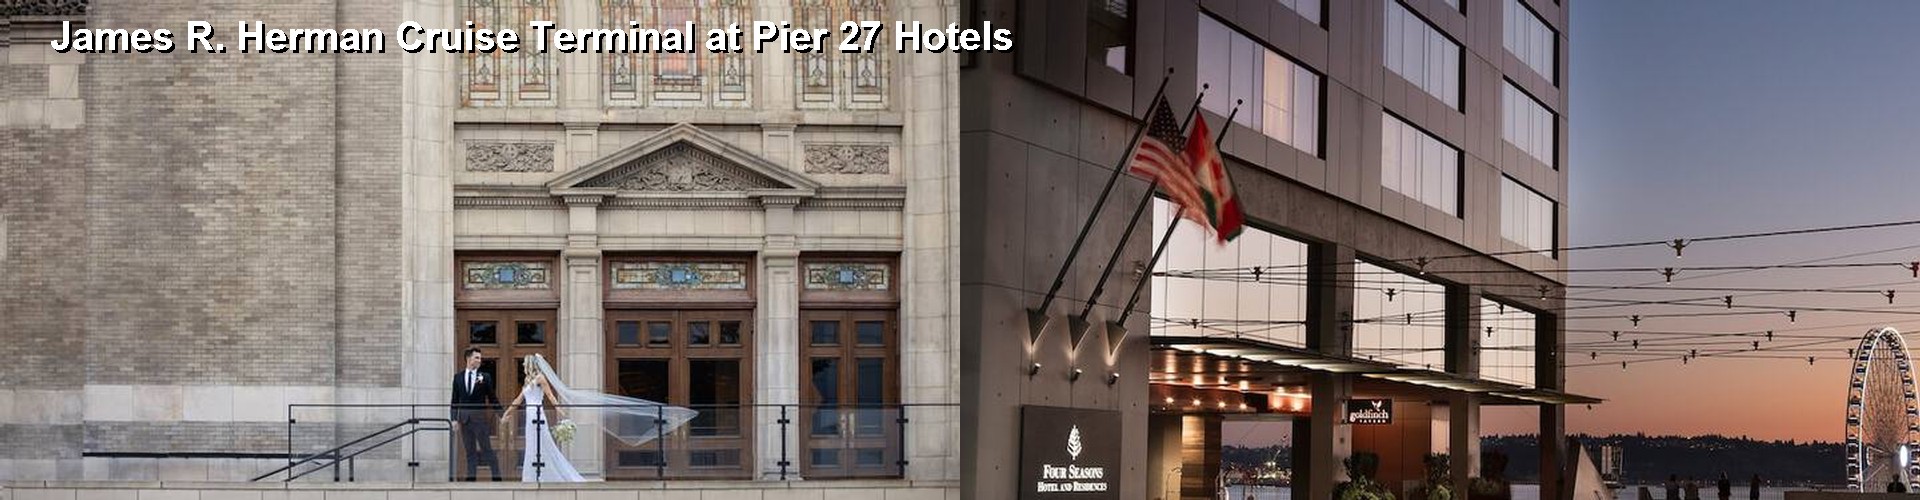 5 Best Hotels near James R. Herman Cruise Terminal at Pier 27